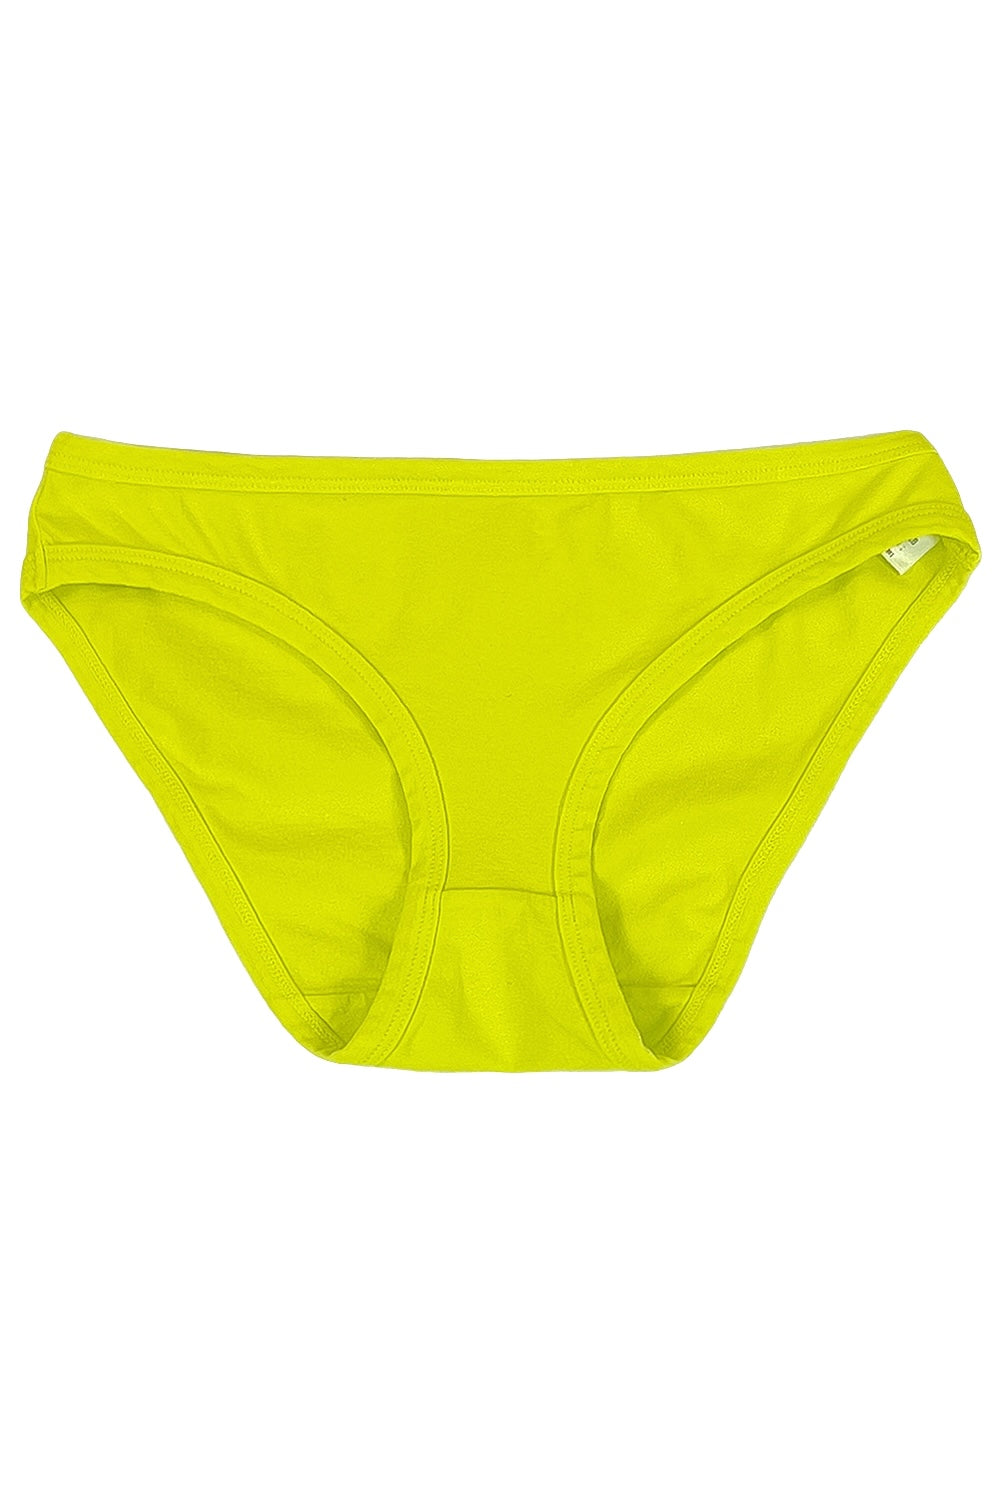 Bikini Brief | Jungmaven Hemp Clothing & Accessories / Color: Limelight